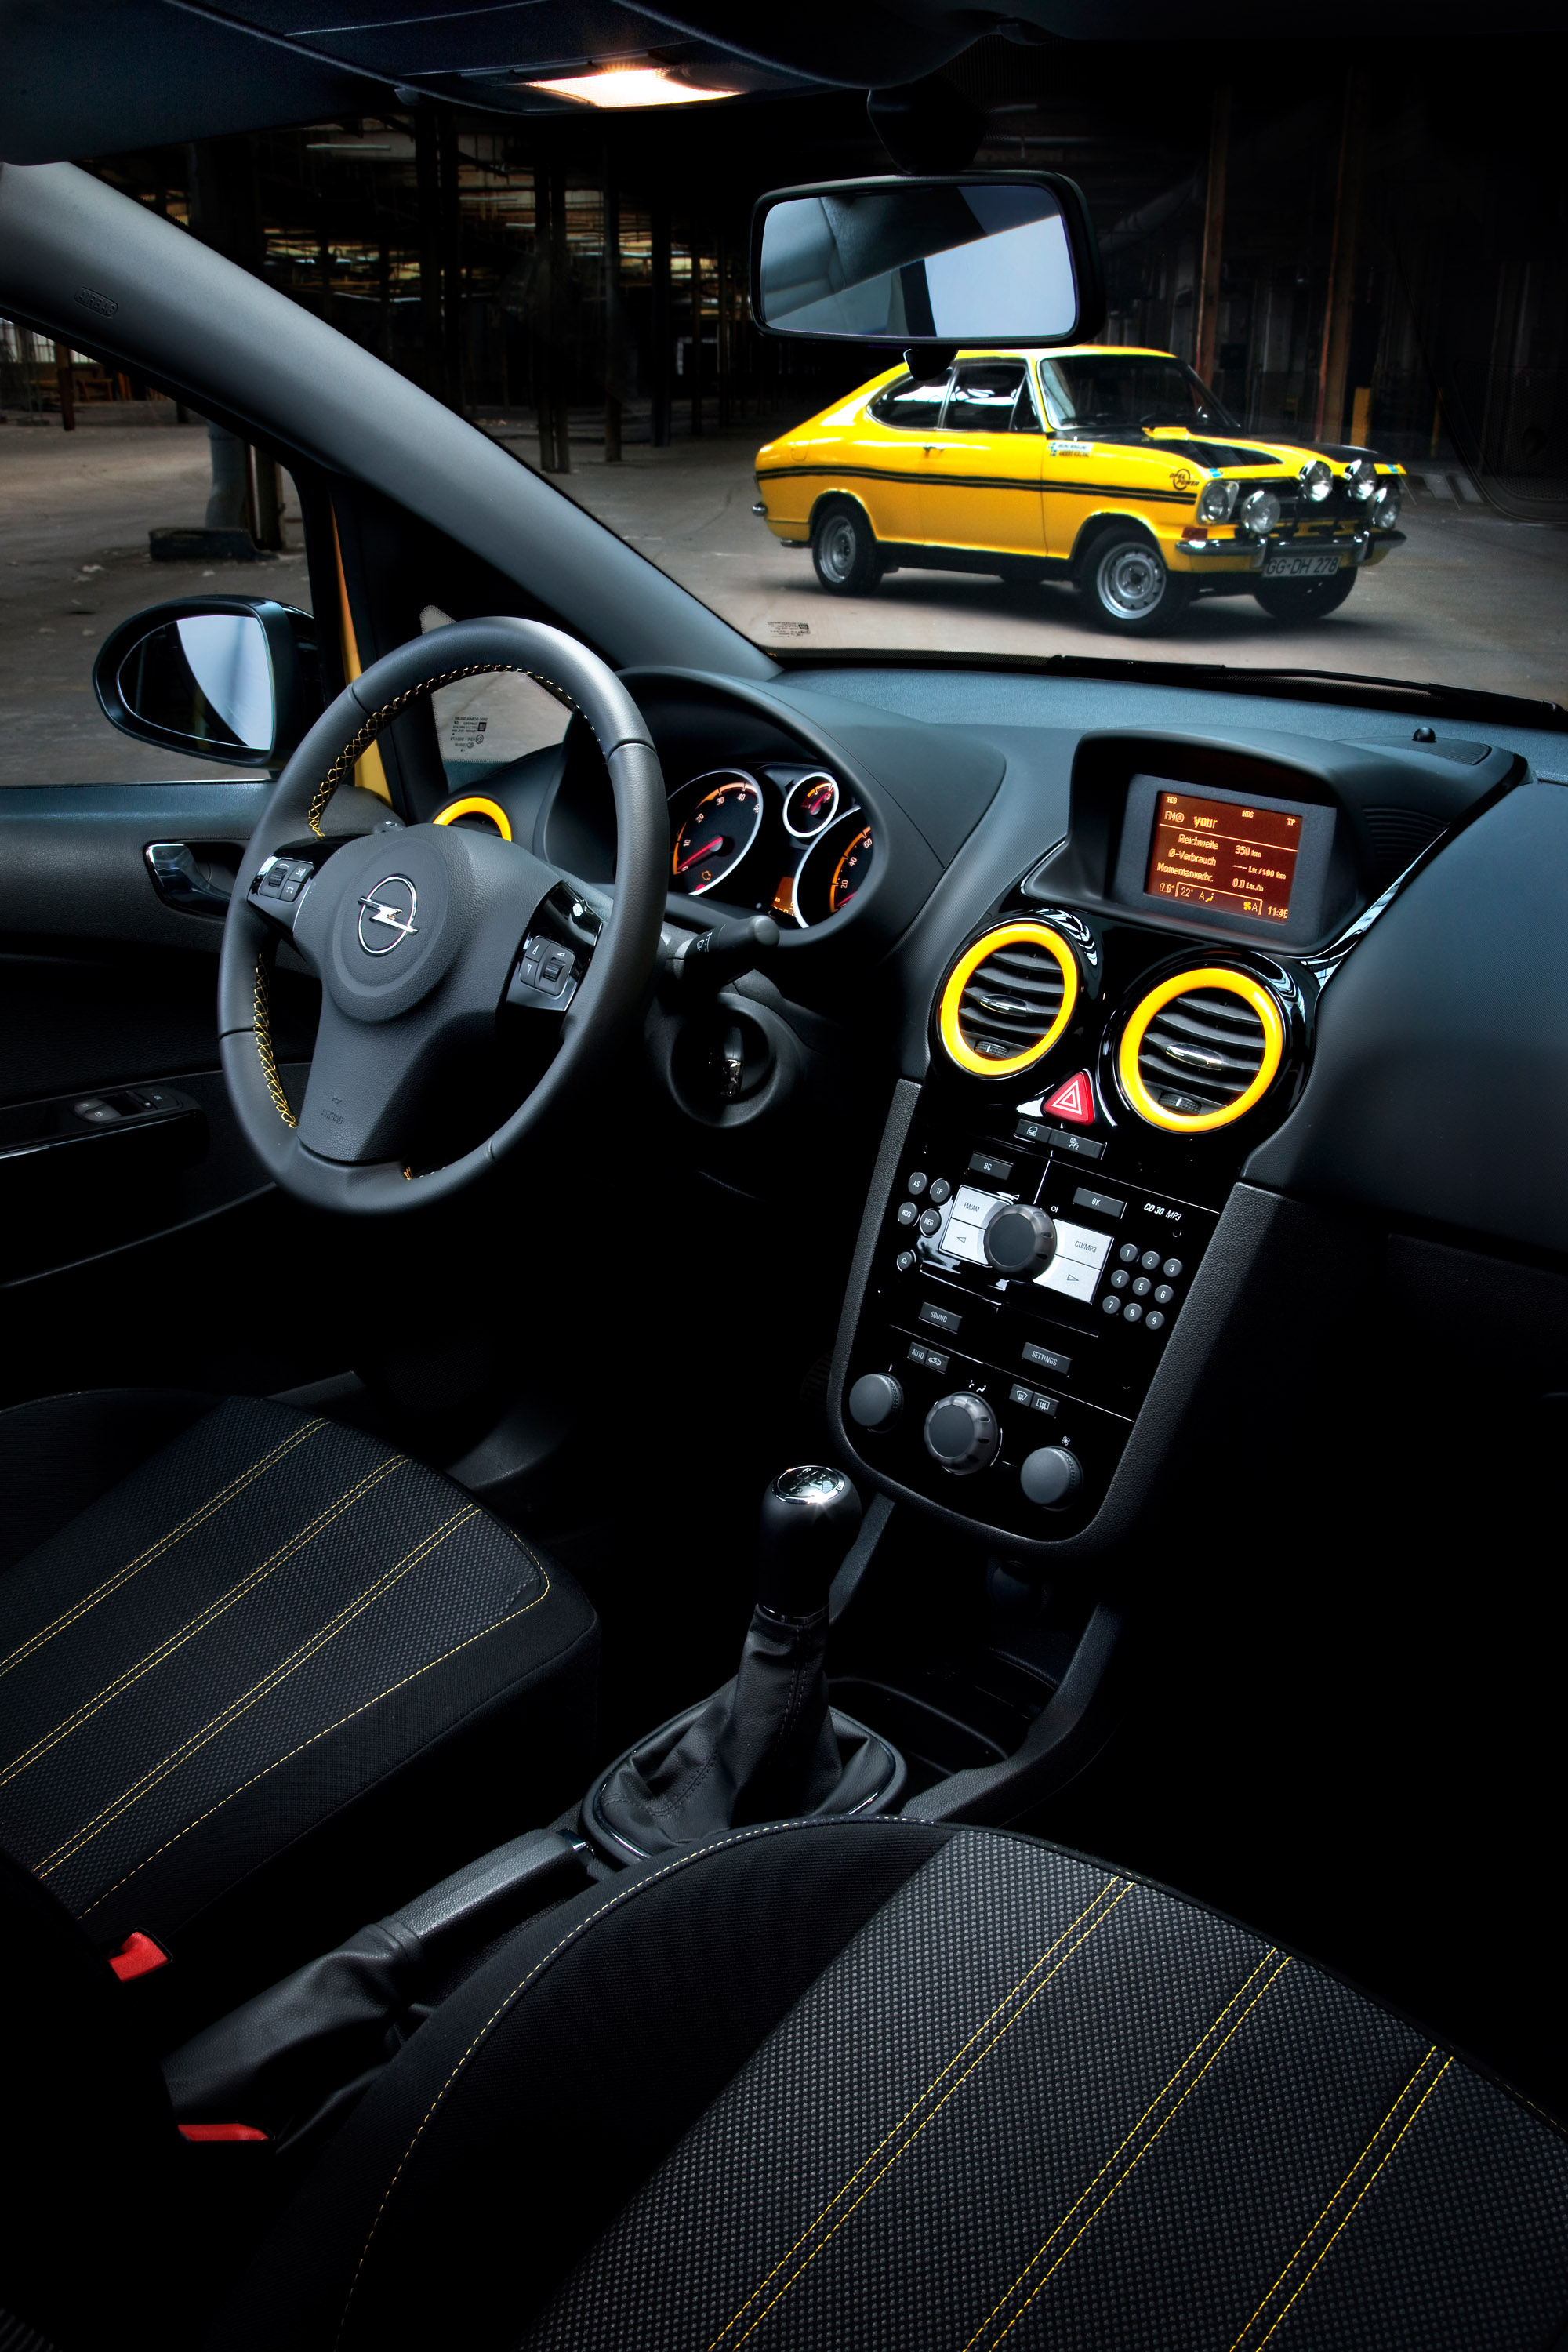 Opel Corsa Color Race